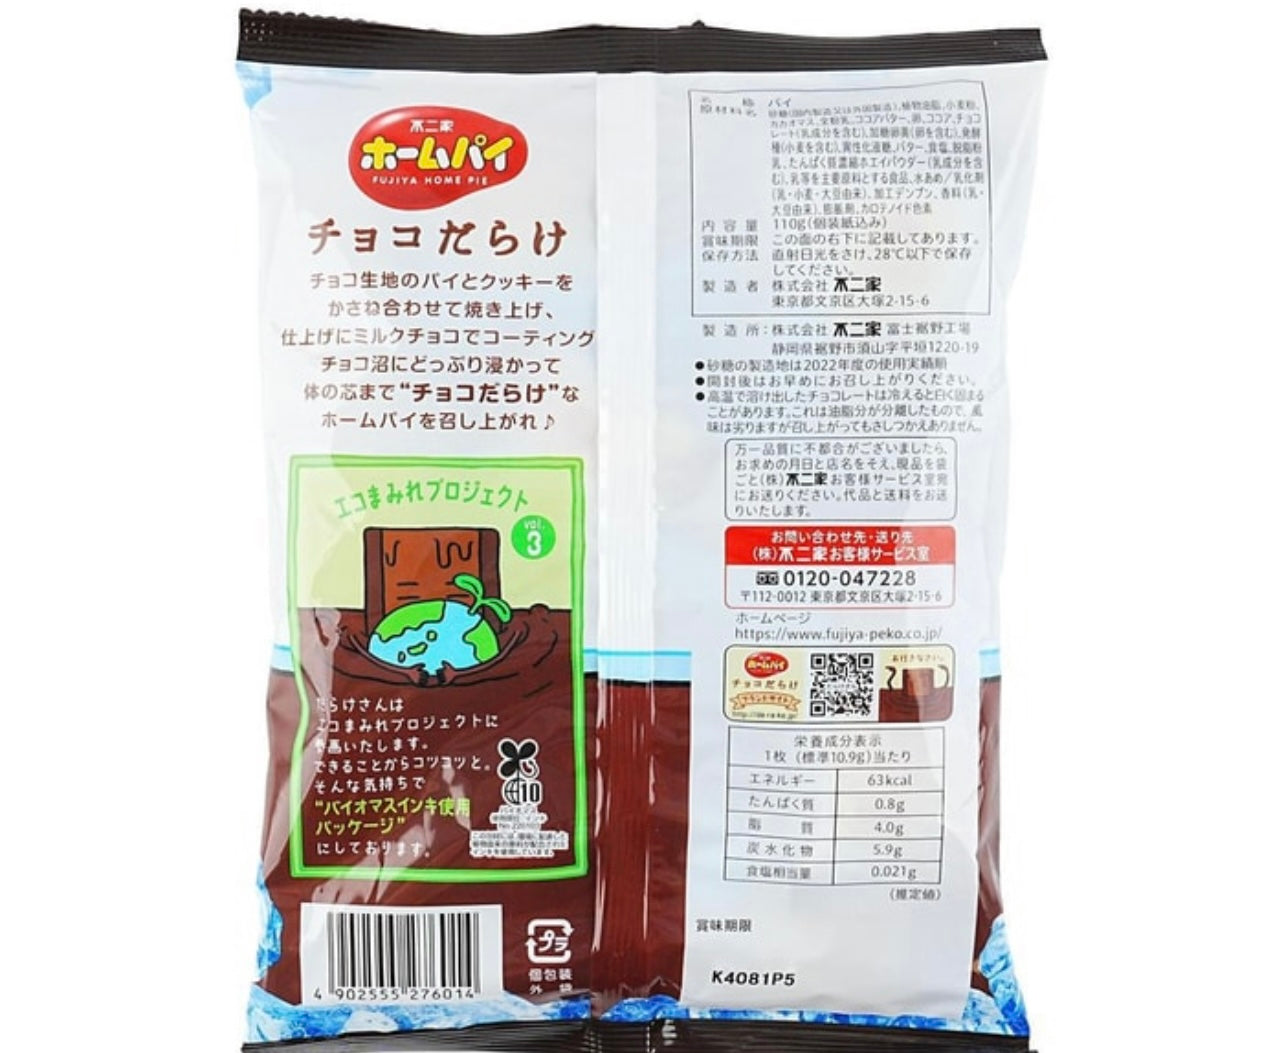 FUJIYA All Chocolate Square Cookies 3.88 oz - Japan